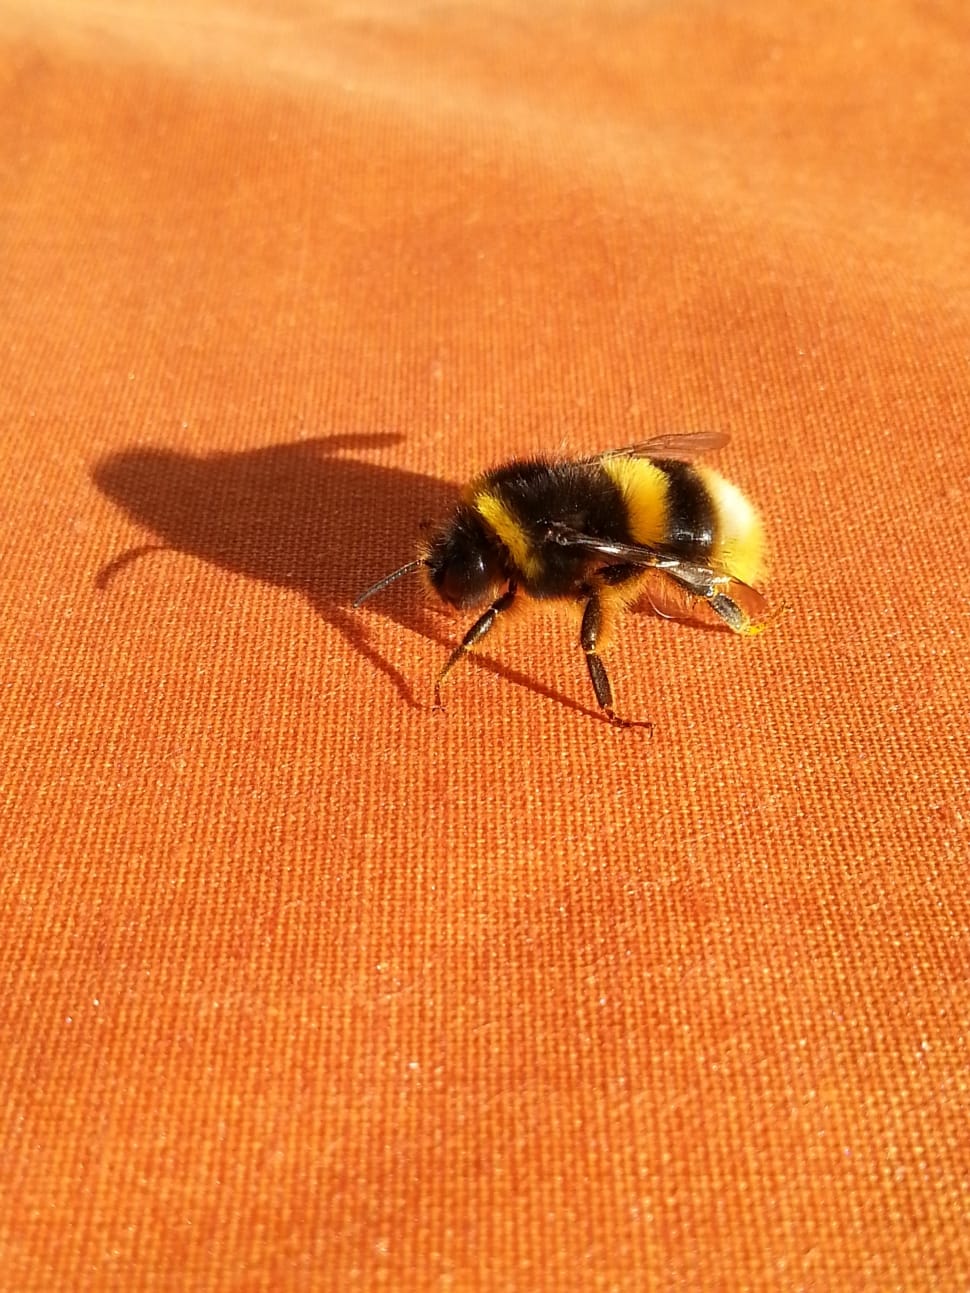 Free download blue and black bee image Peakpx [970x1293] for your Desktop, Mobile & Tablet. Explore Orange And Black Bumblebee Wallpaper. Orange And Black Bumblebee Wallpaper, Black And Orange